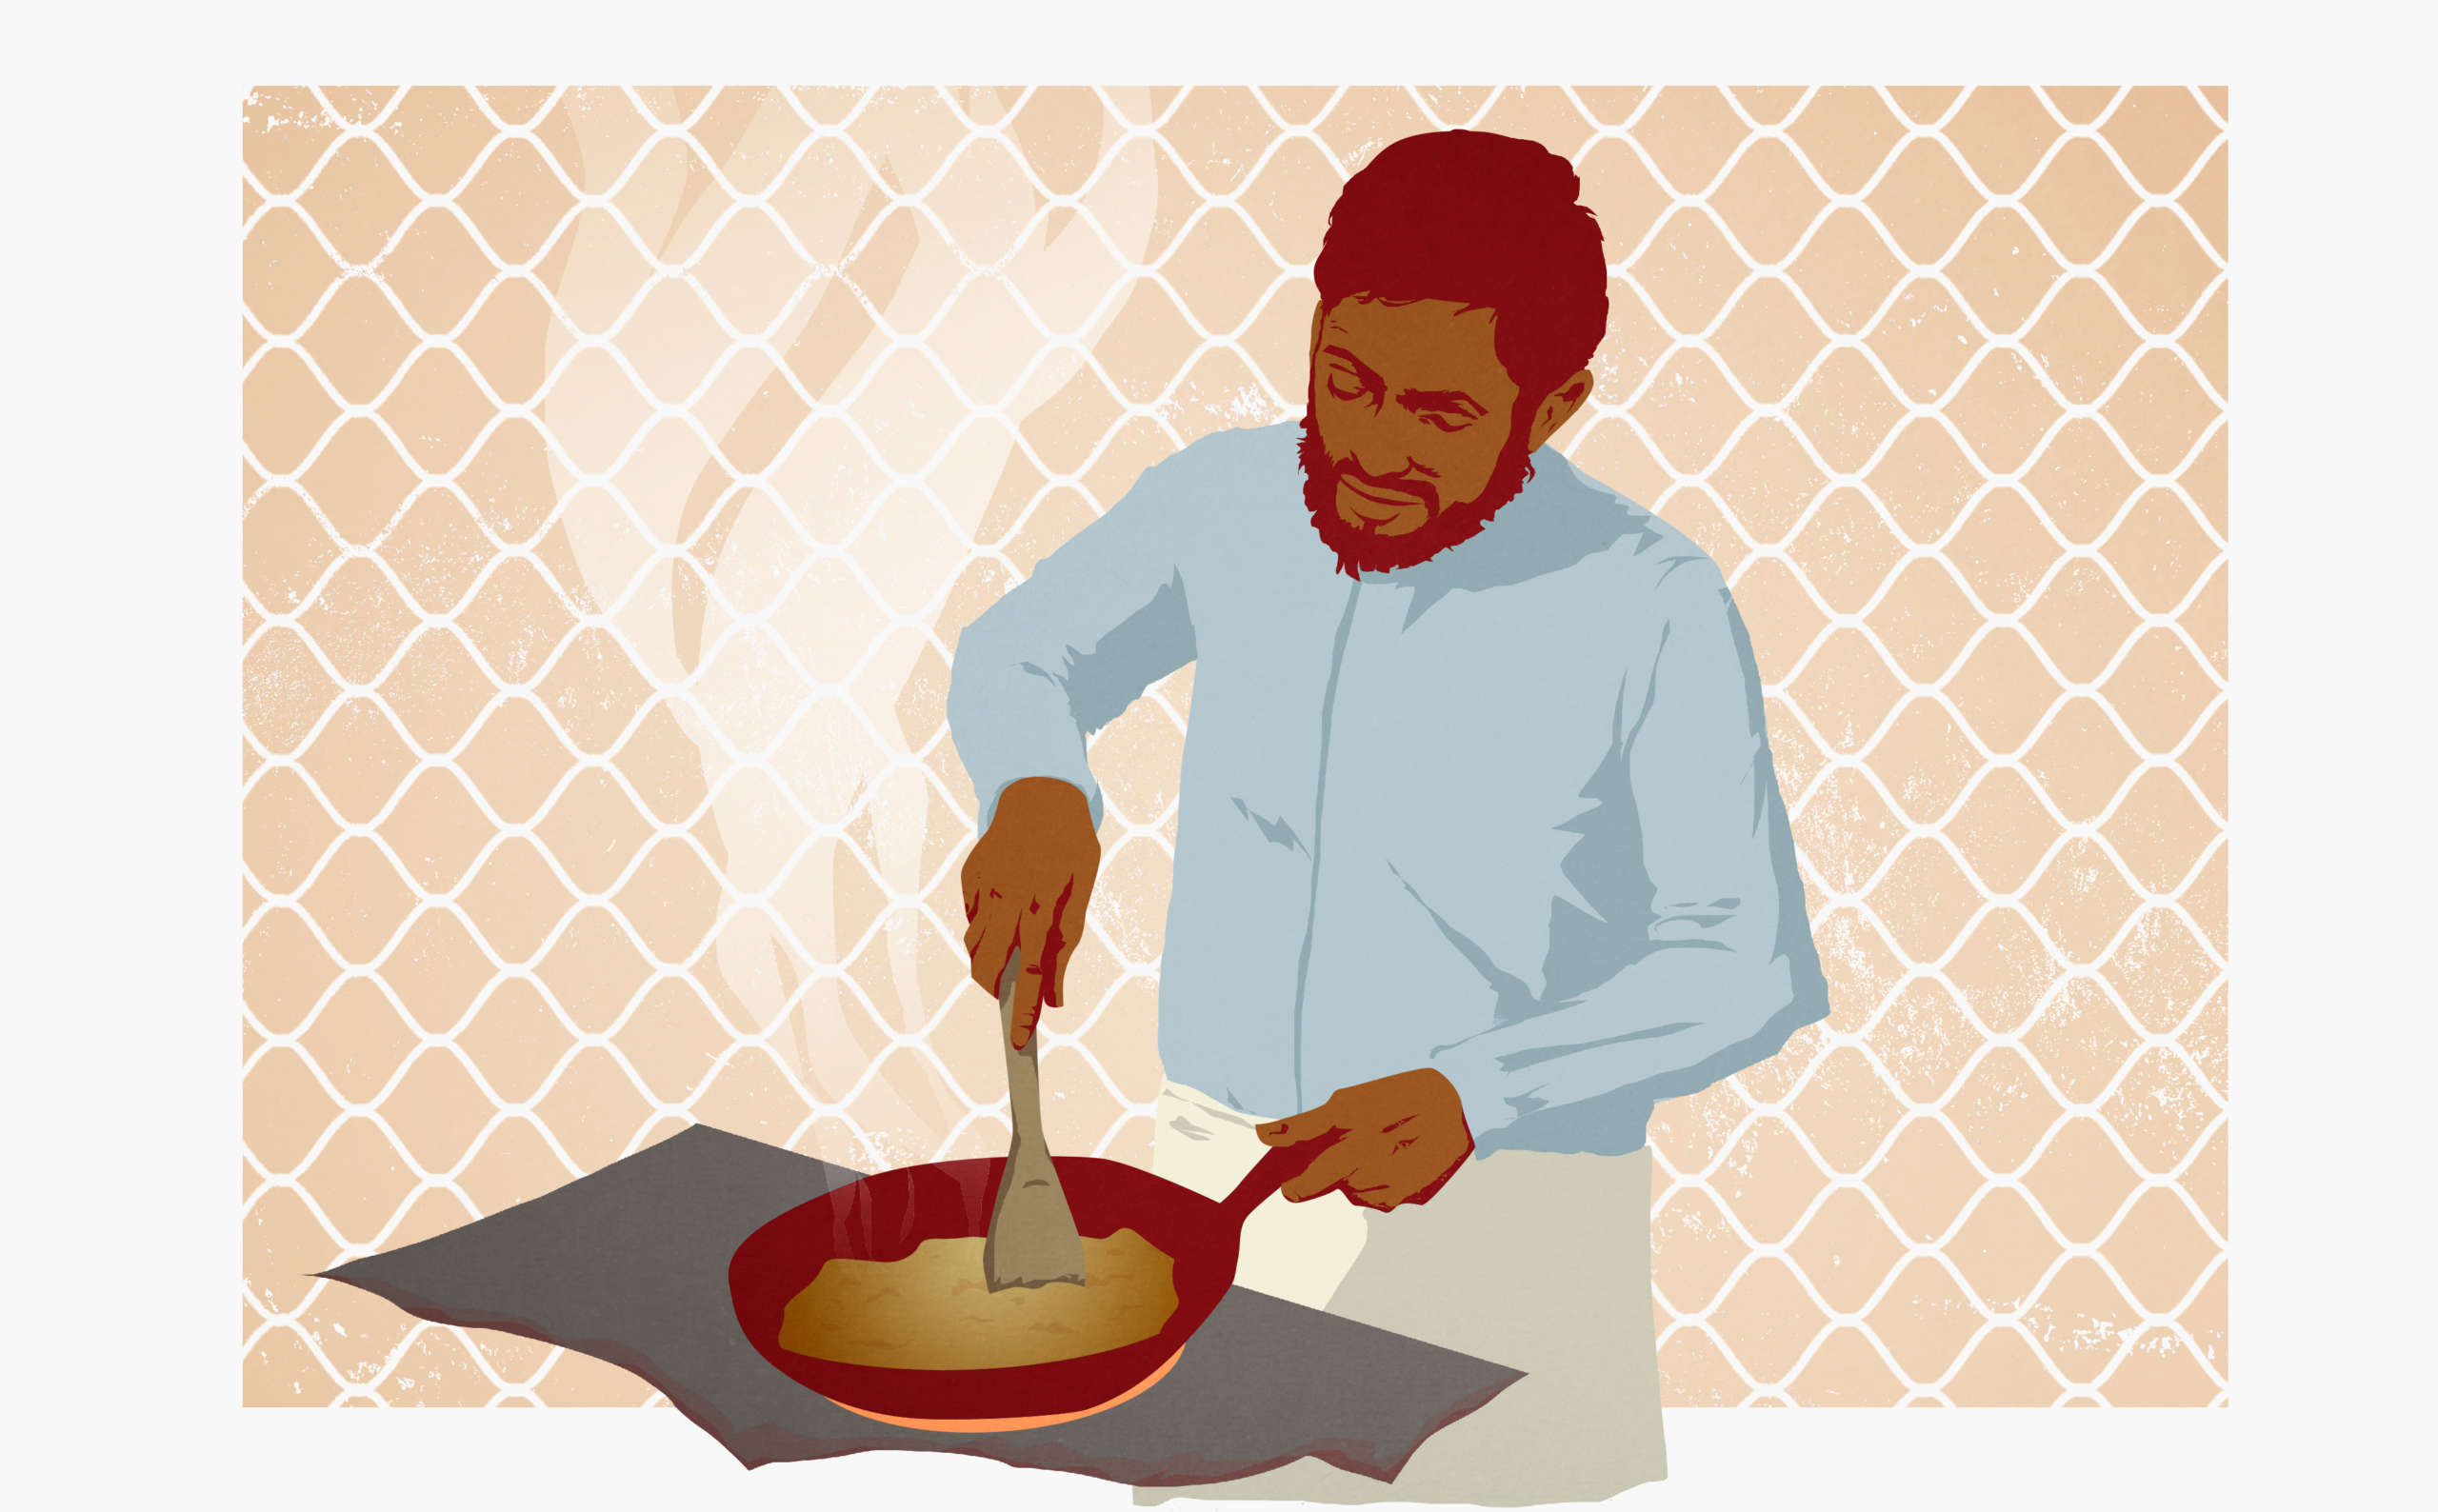 File:Contract worker prepares a big pot of food at Guantanamo.jpg